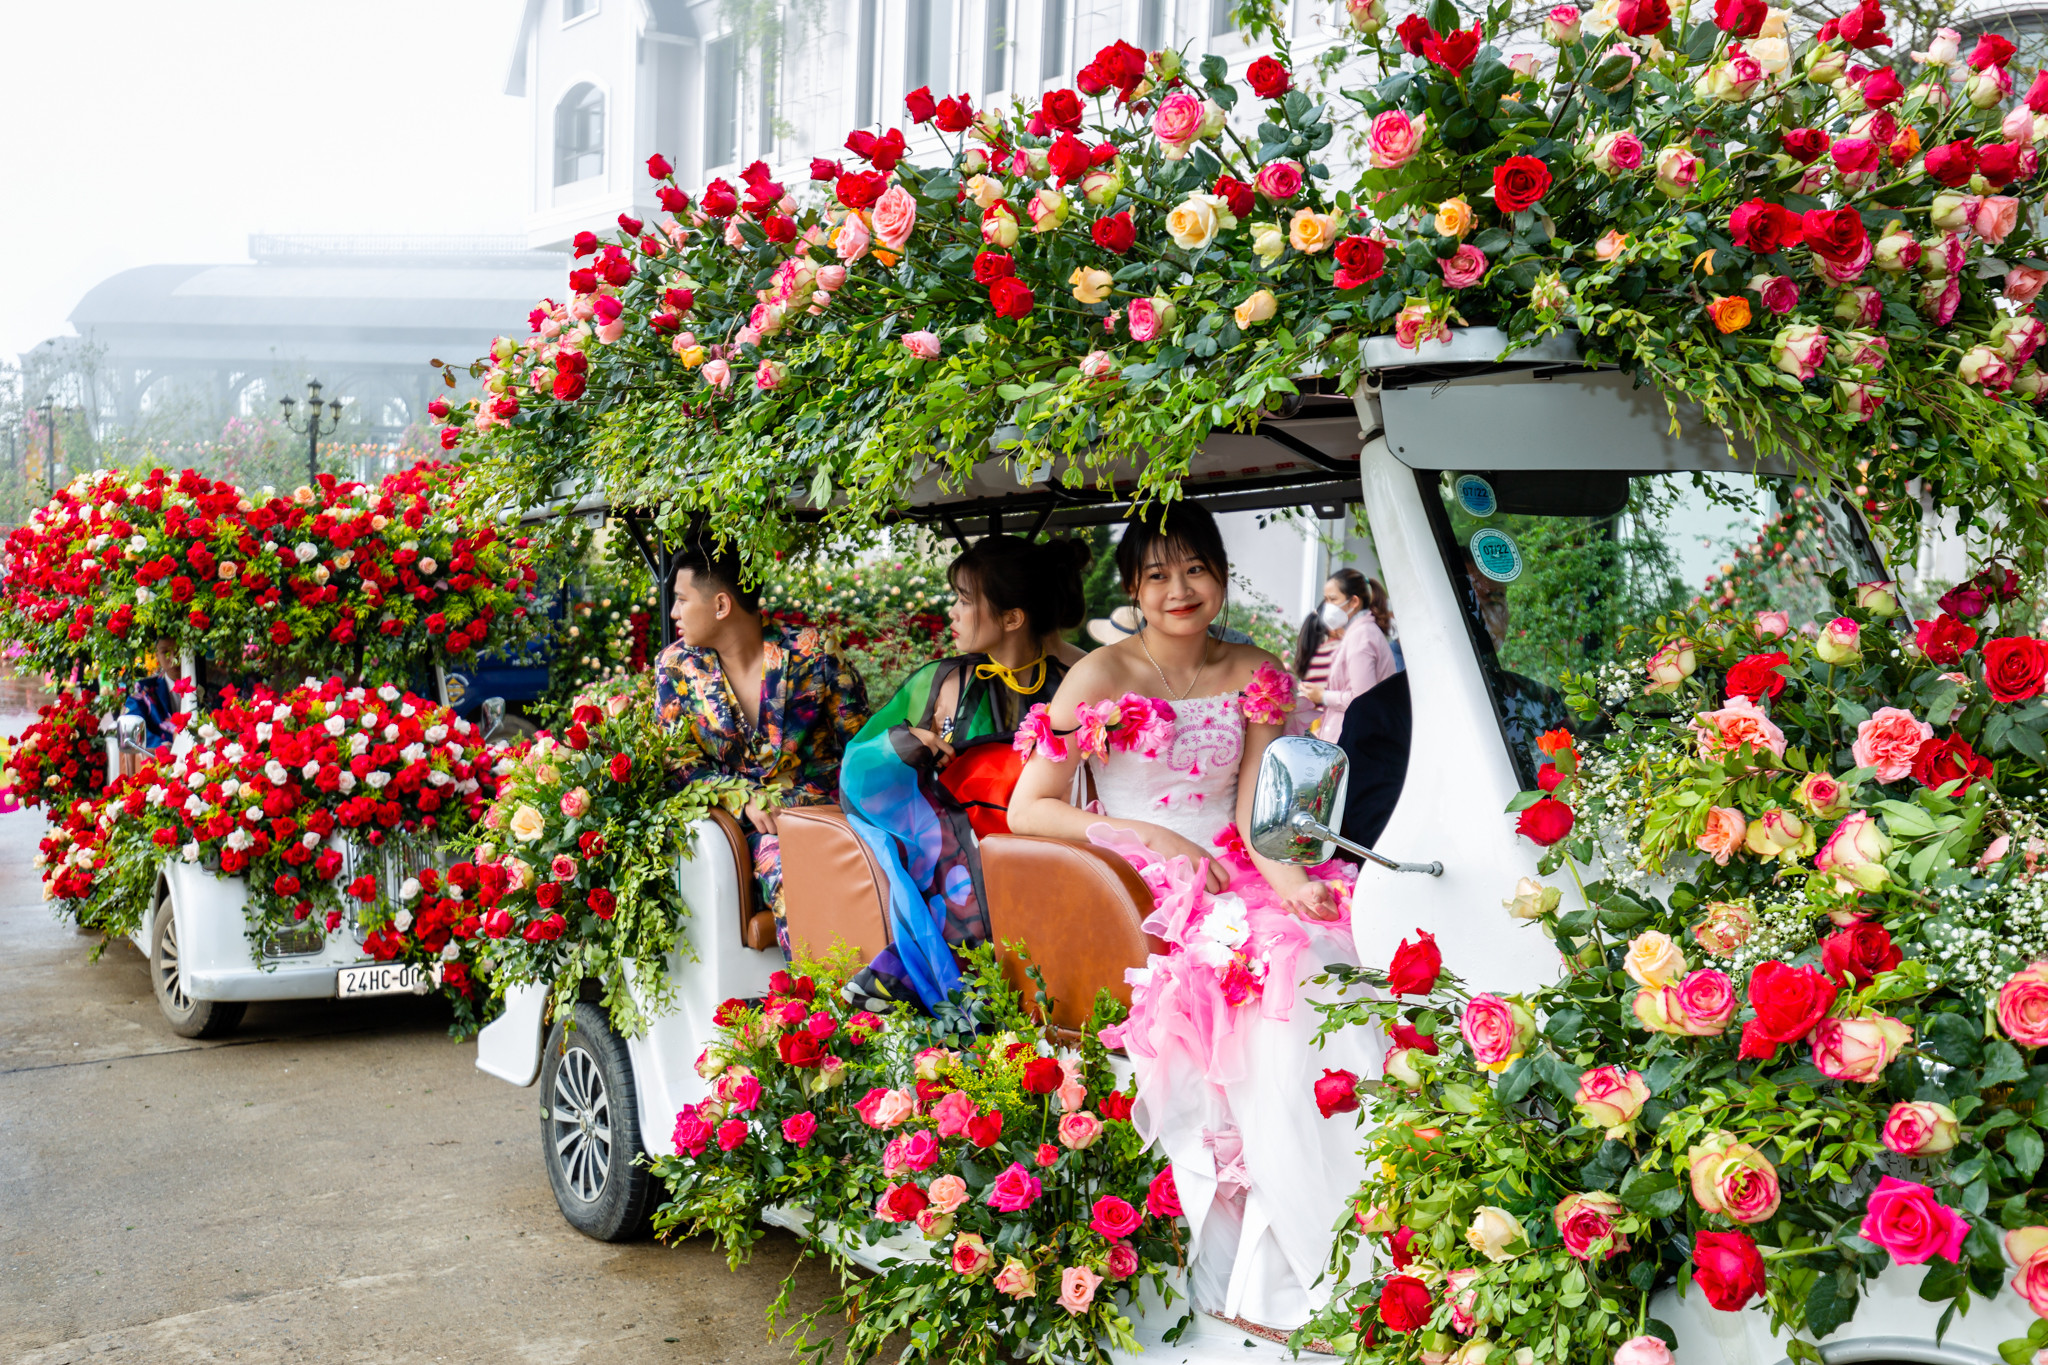 Sapa welcomes the Rose Festival